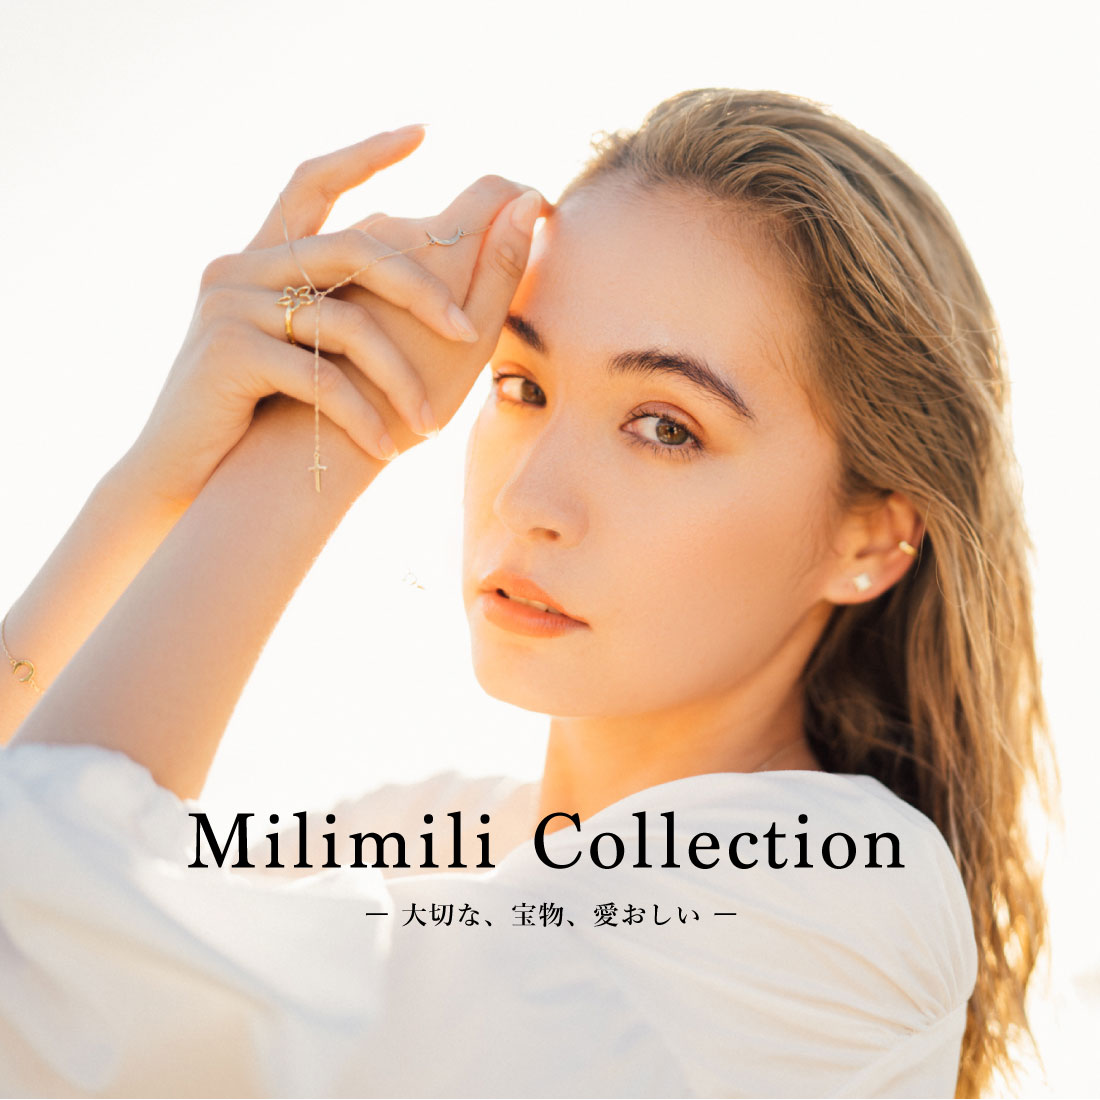 Milimili Collection